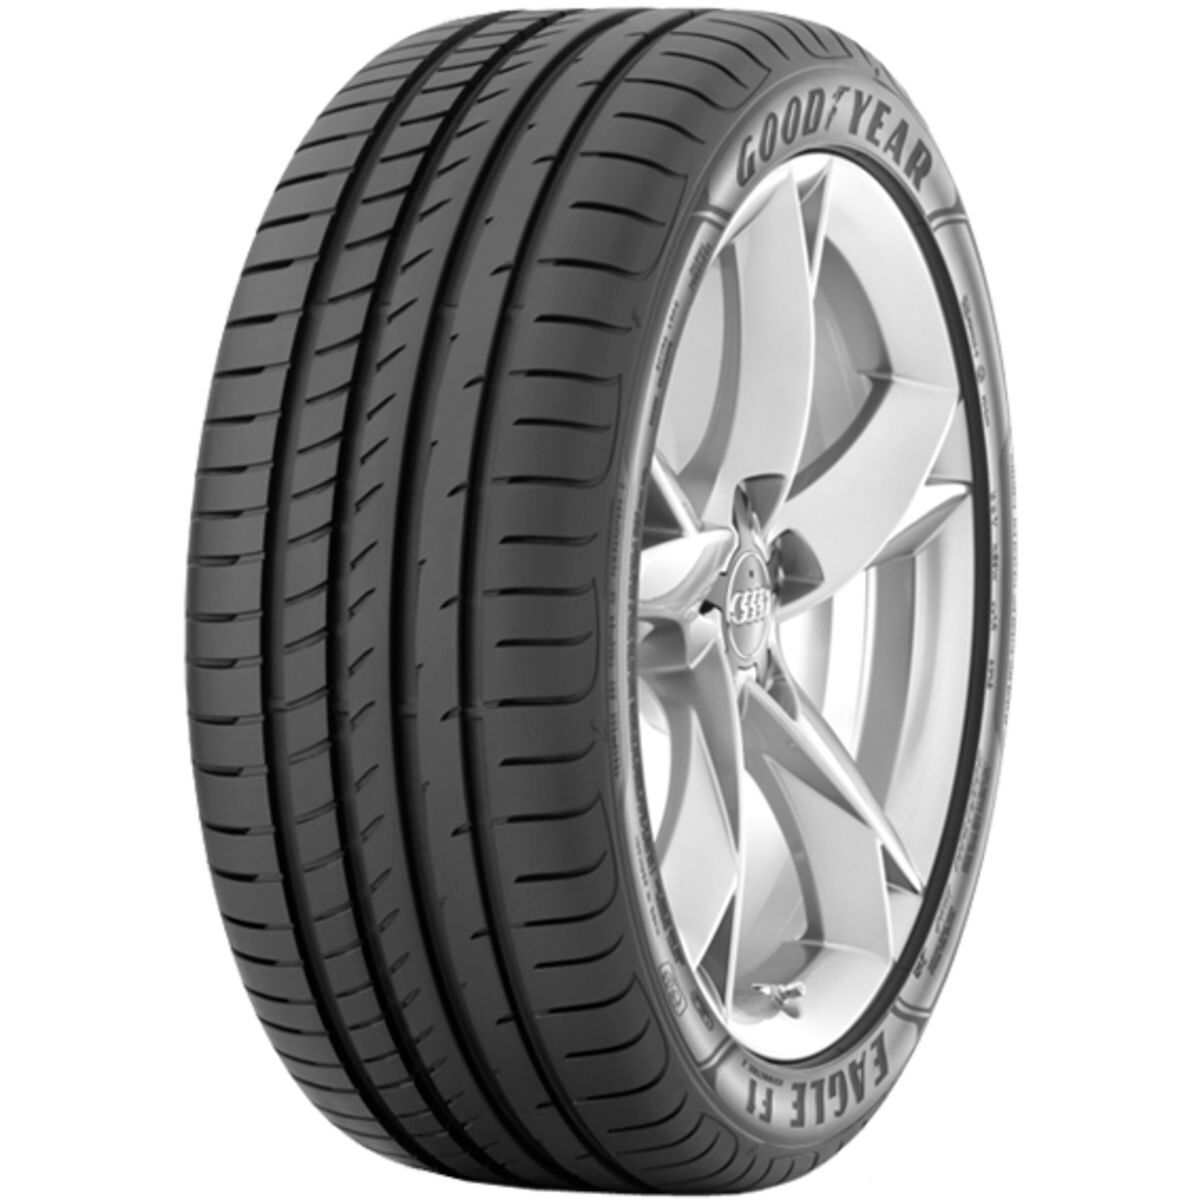 Neumáticos de verano GOODYEAR Eagle F1 Asymmetric 2 265/45R18 101Y